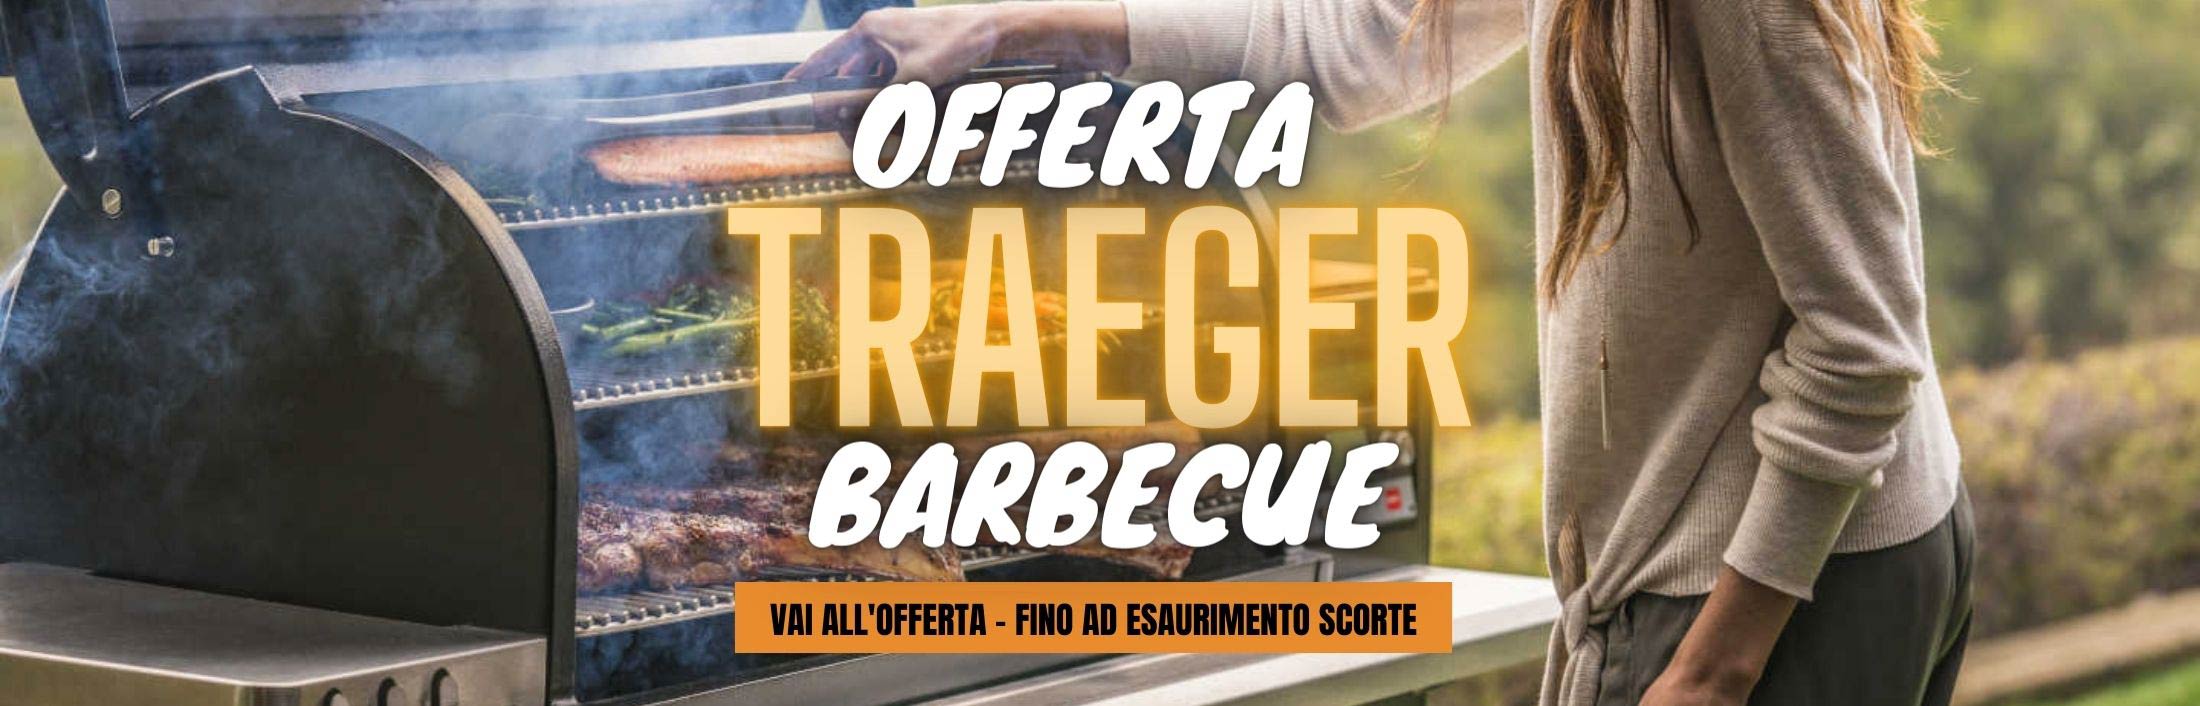 Barbecue Traeger